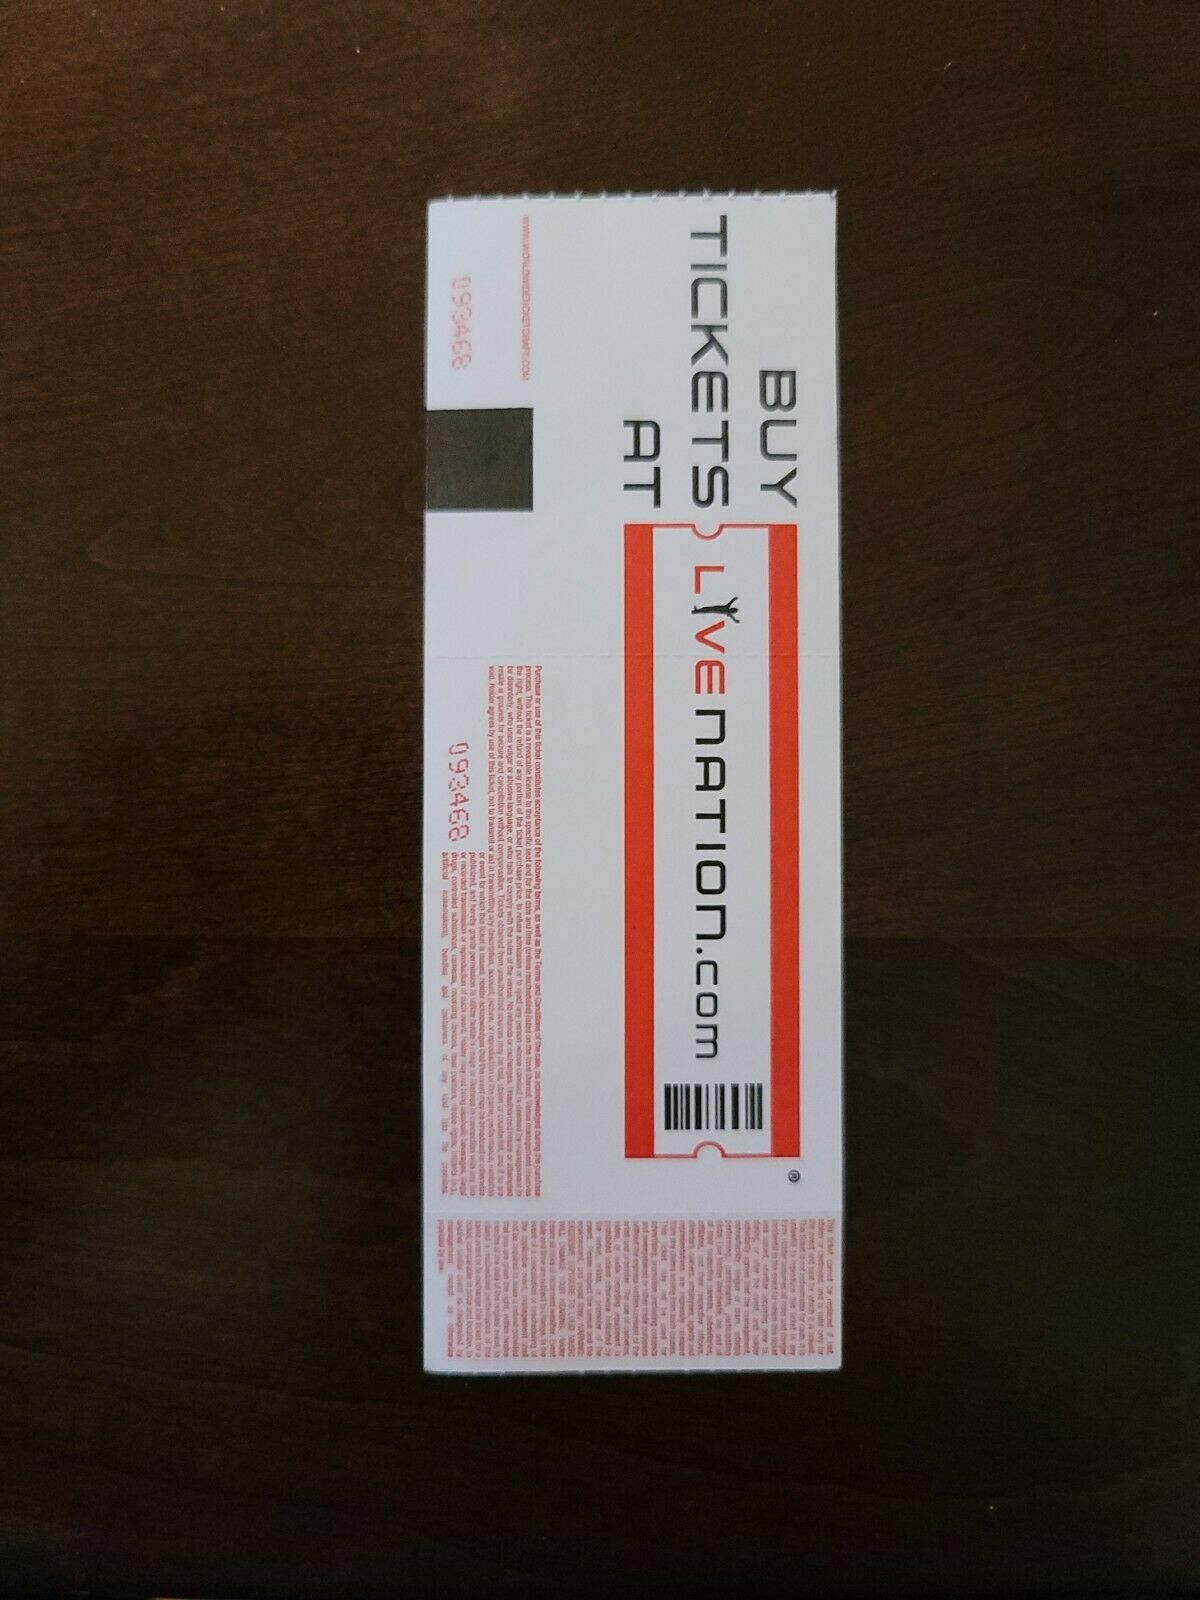 Depeche Mode 2013, Toronto Molson Amphitheater Original Concert Ticket Stub